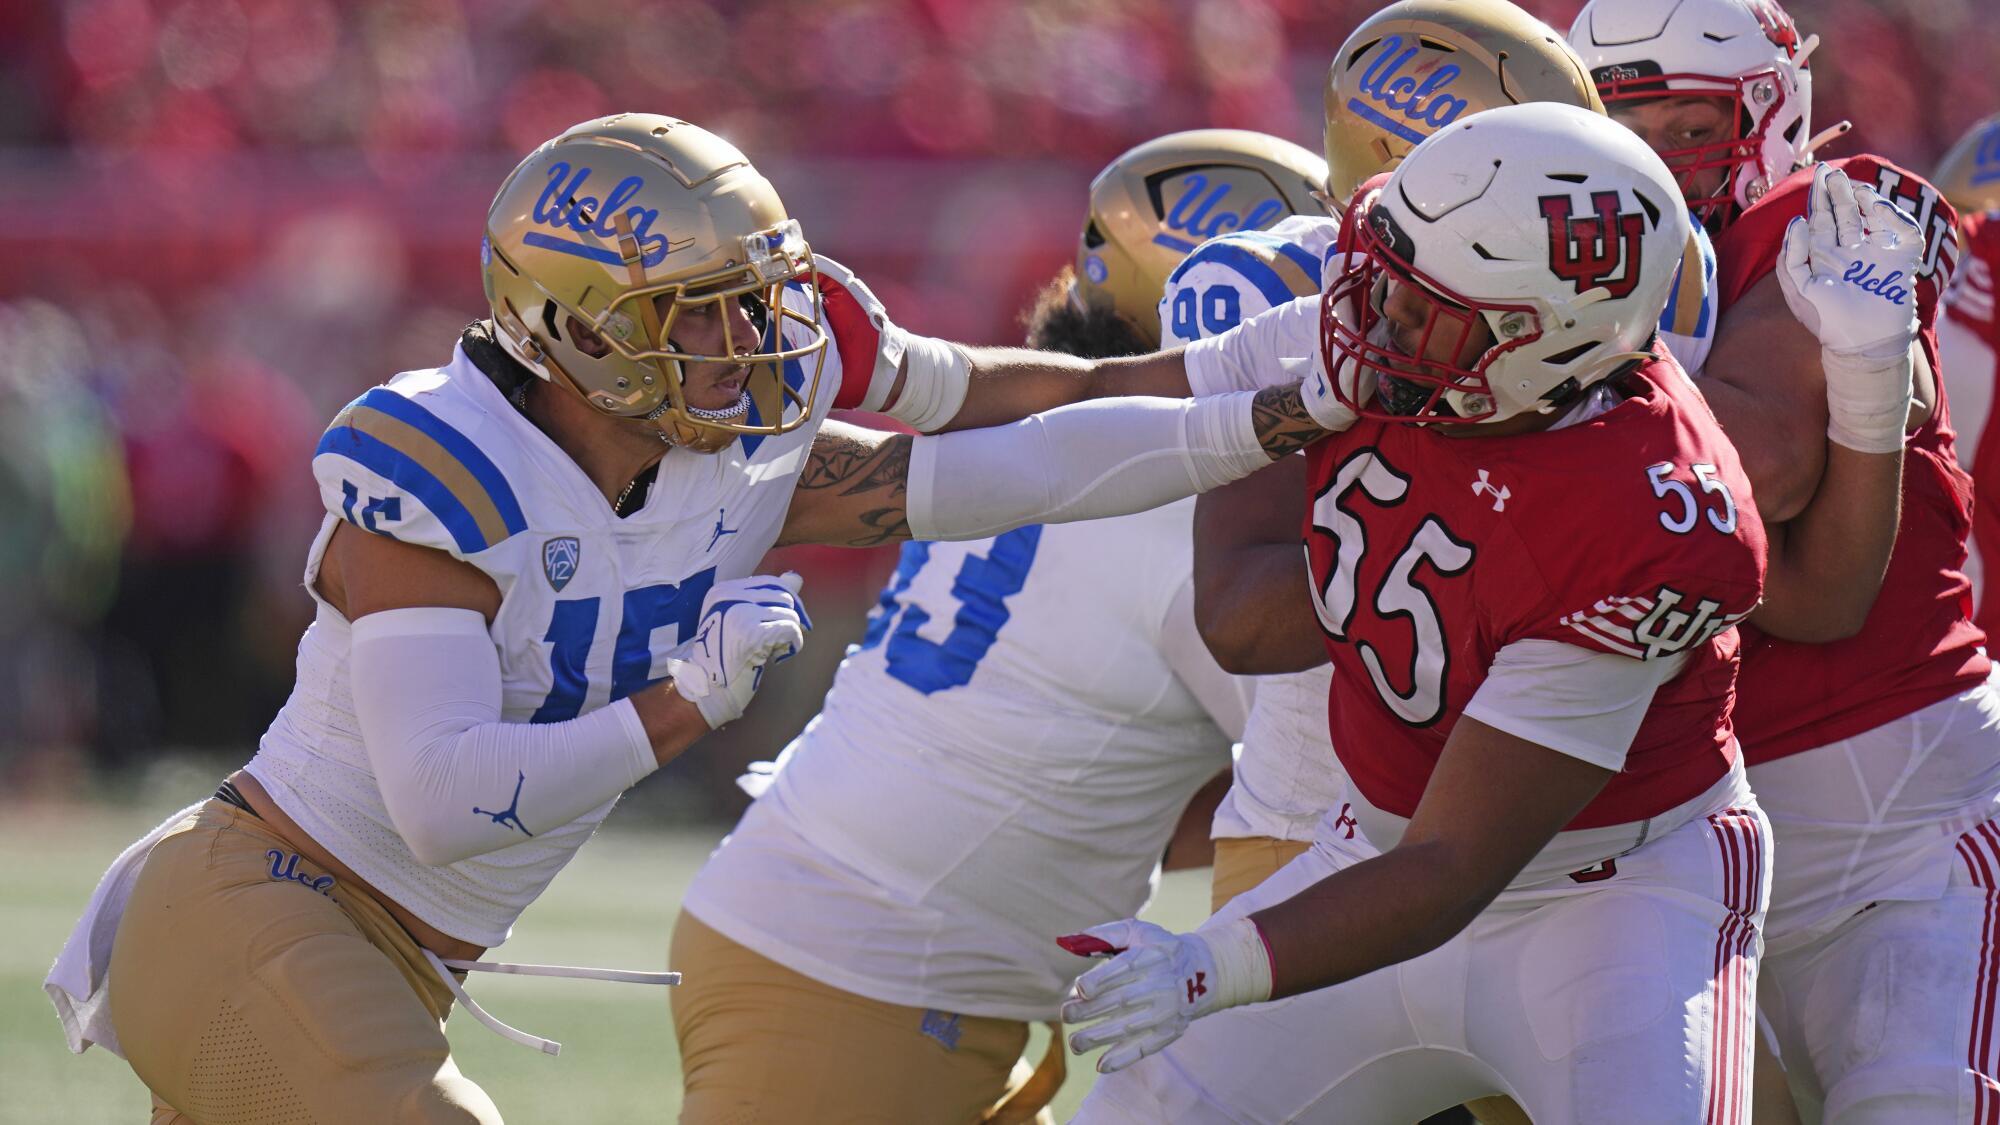 UCLA defensive lineman Laiatu Latu battles with Utah offensive lineman Spencer Fano for position 